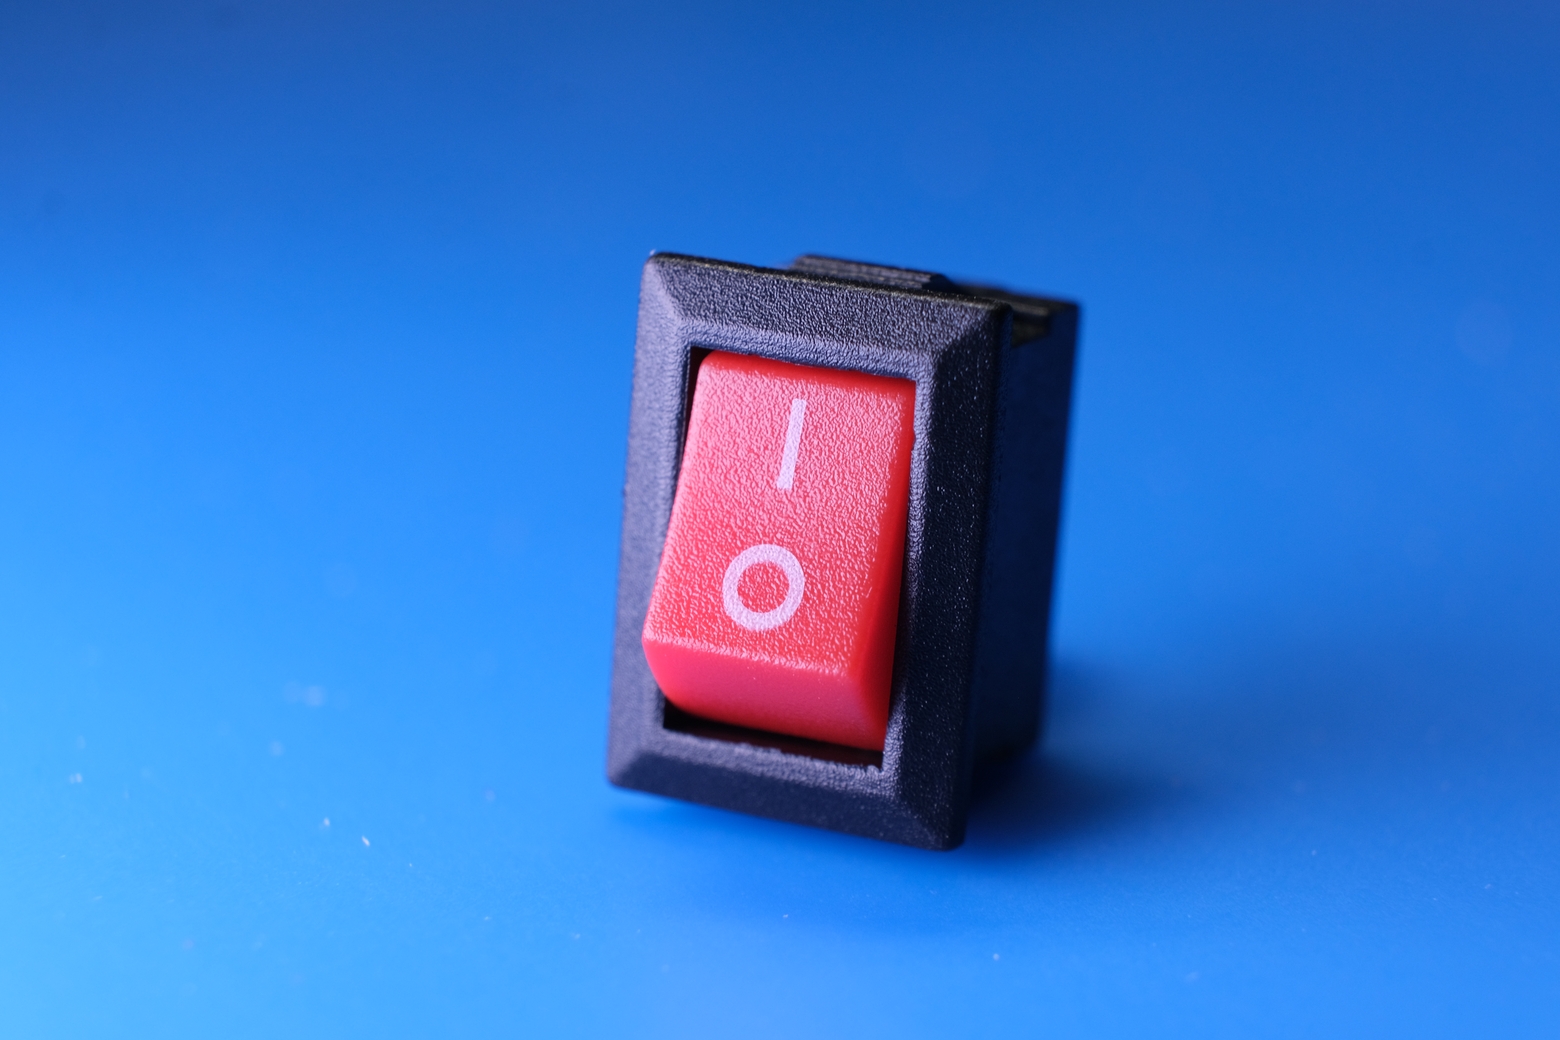 Closeup photo of an on-off rocker switch